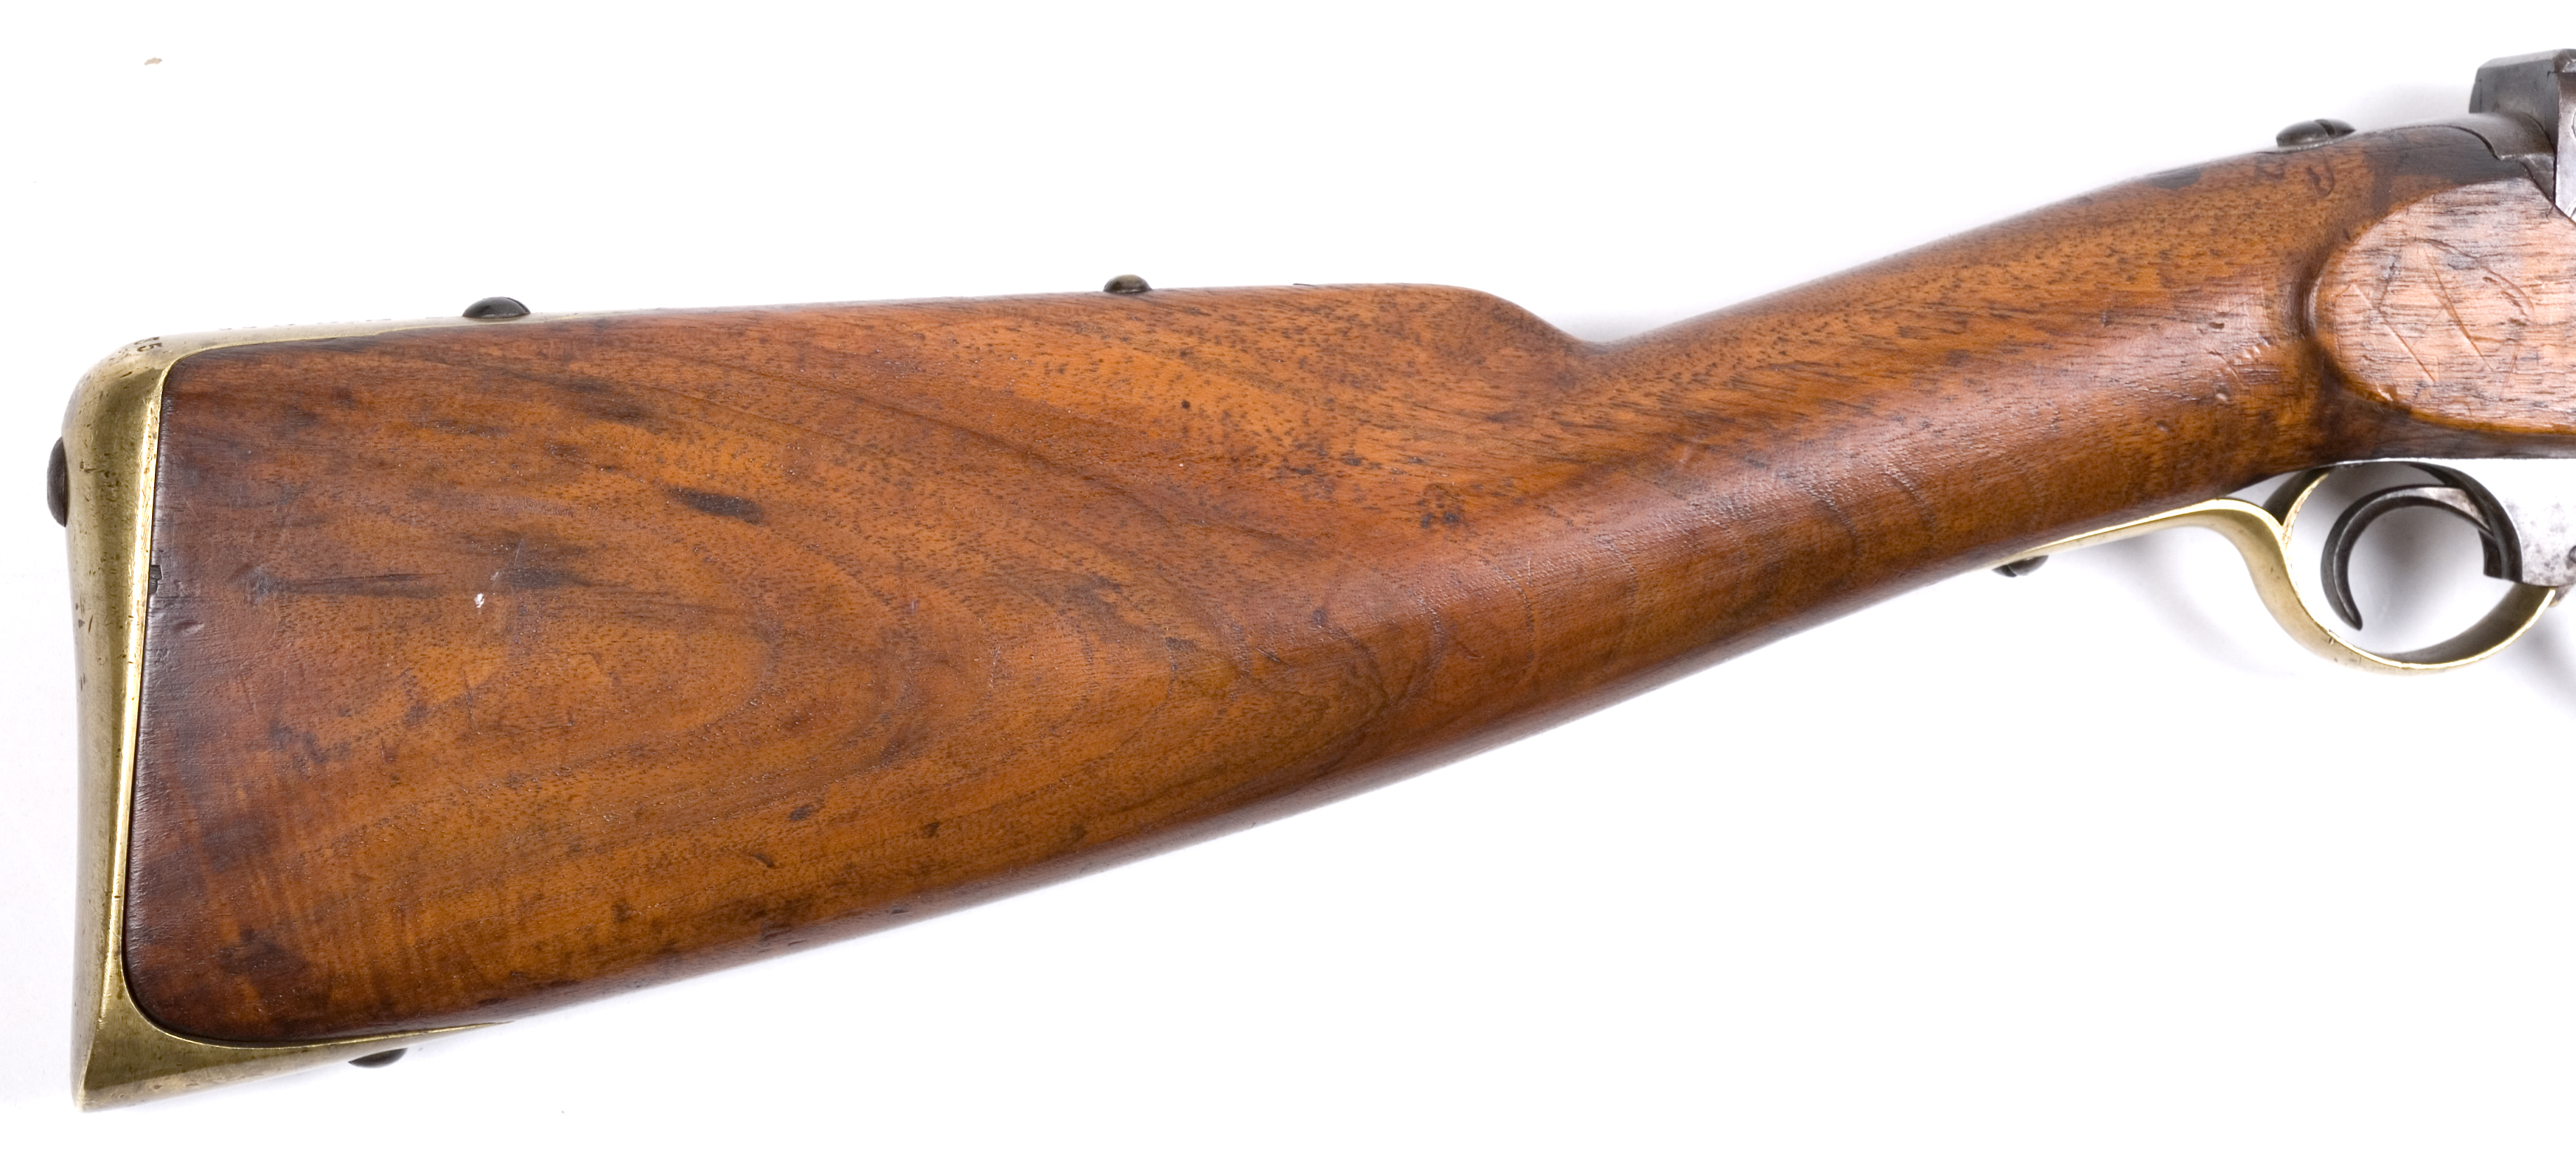 ./guns/rifle/bilder/Rifle-Herzberg-Kammerlader-M1849-55-59-1935-8.jpg